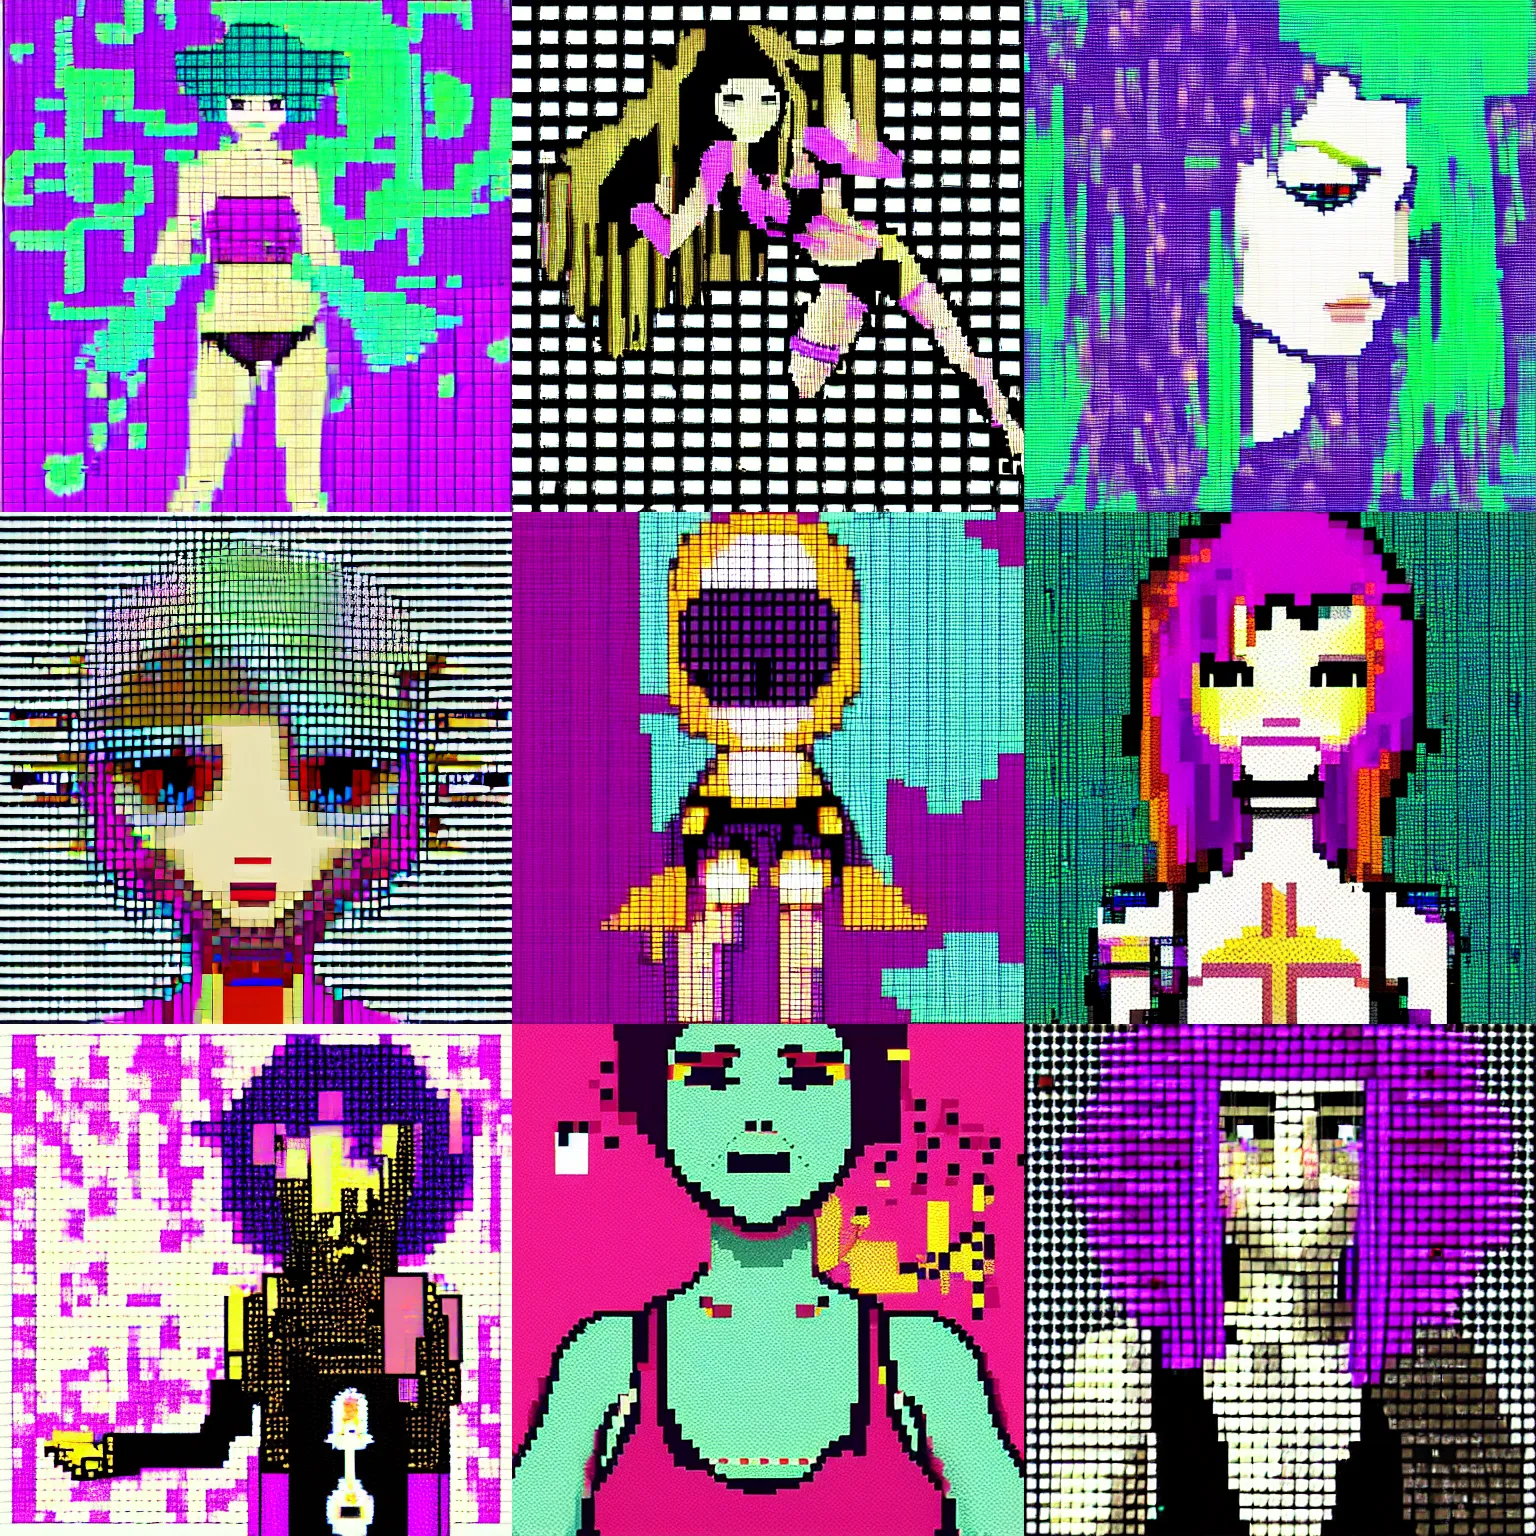 Prompt: cryptopunk girl, pixelated digital art